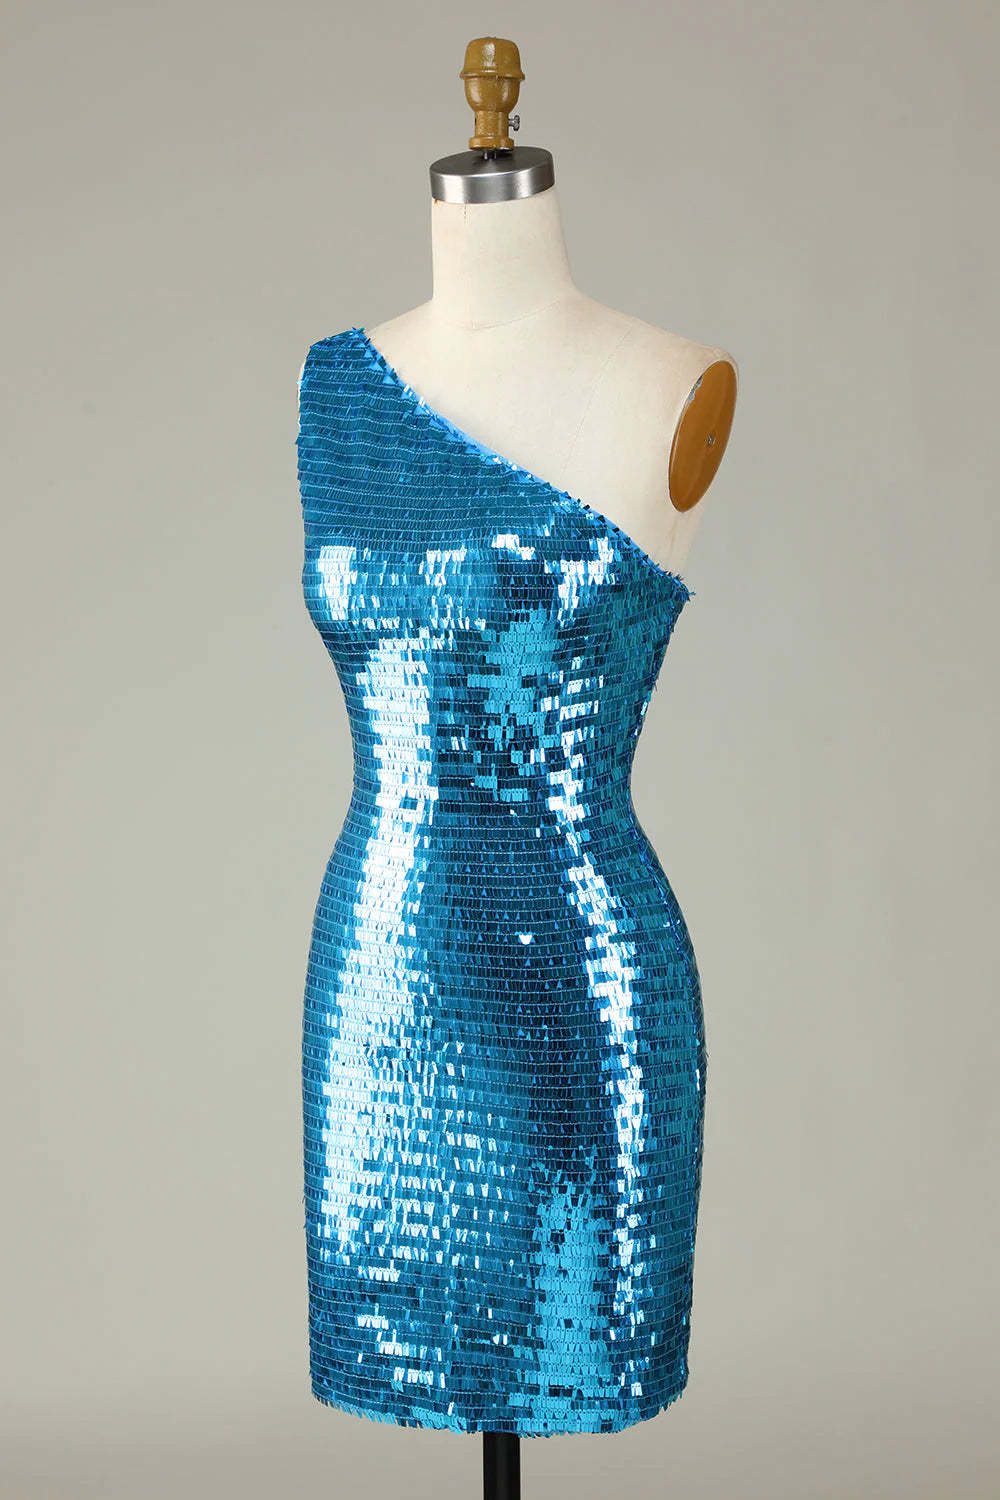 Sheath One Shoulder Royal Blue Sequins Short Homecoming Dress